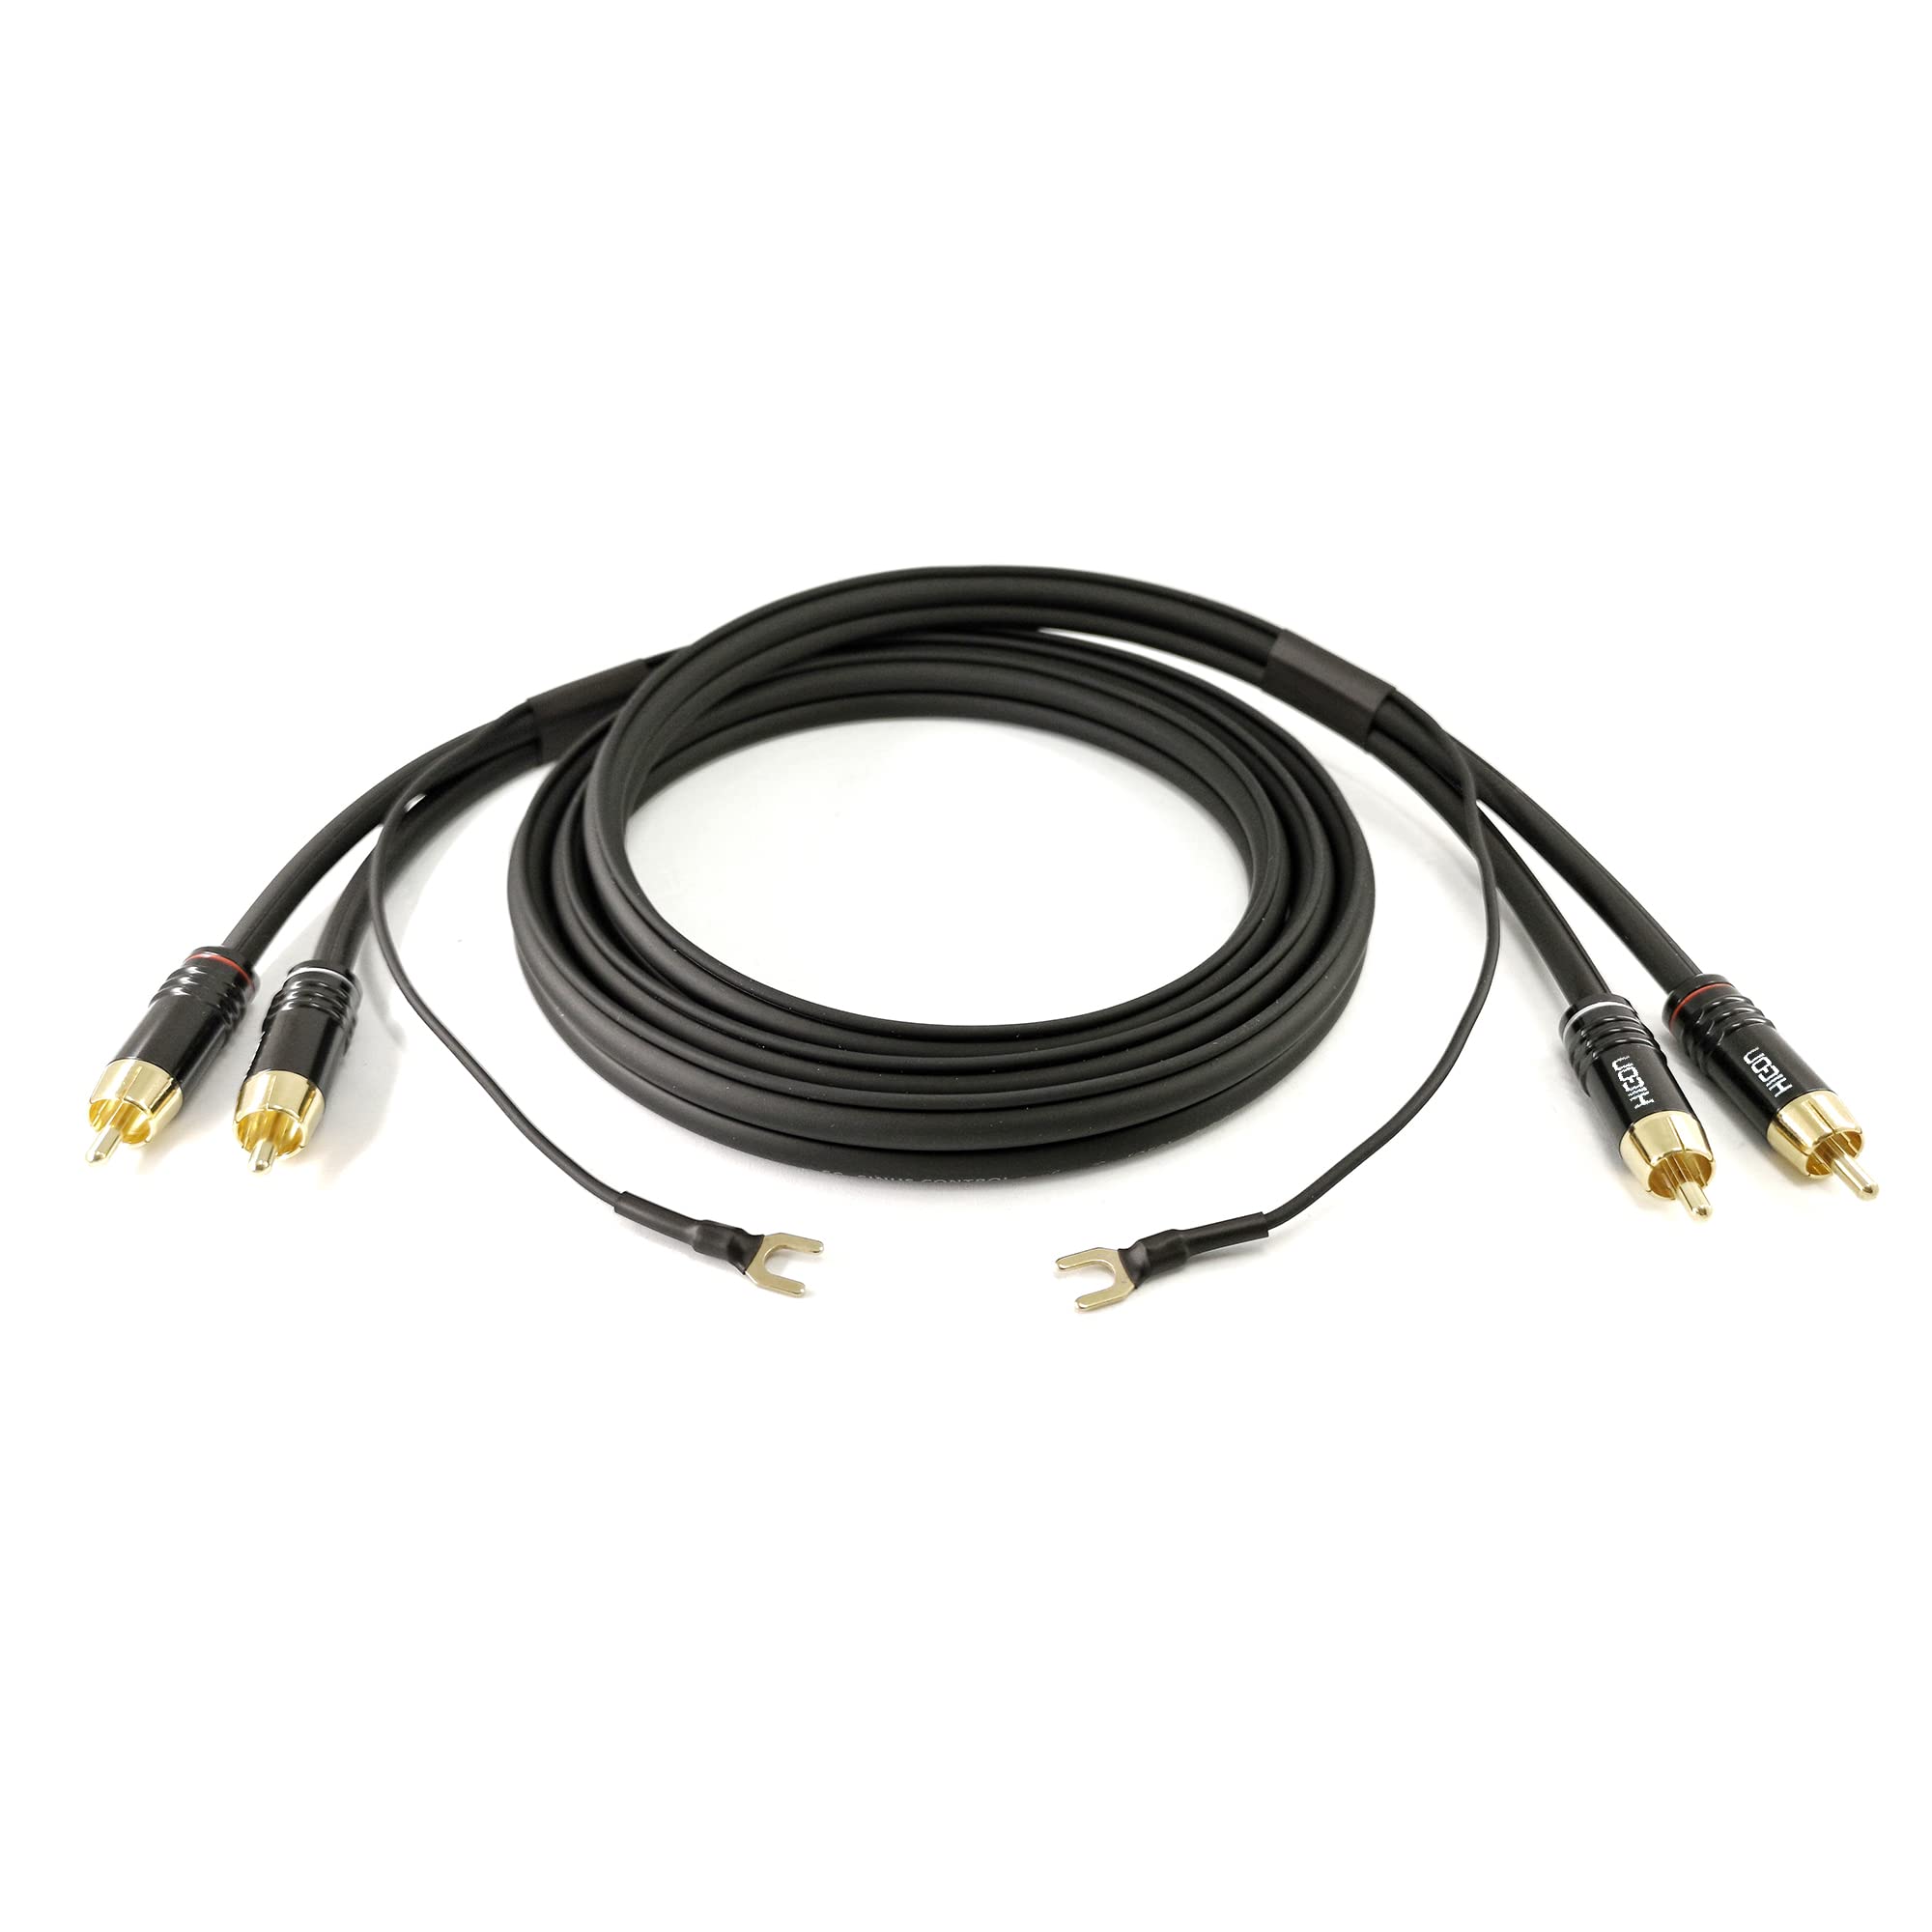 Selected Cable 50cm Phonokabel geschirmt mit extra langer Erdungskabel von 60cm für Plattenspieler 2 x 0,35mm² kurzes RCA Cinch Audiokabel vergoldete Stecker 0,5m - SC81-K3-BLK-0050